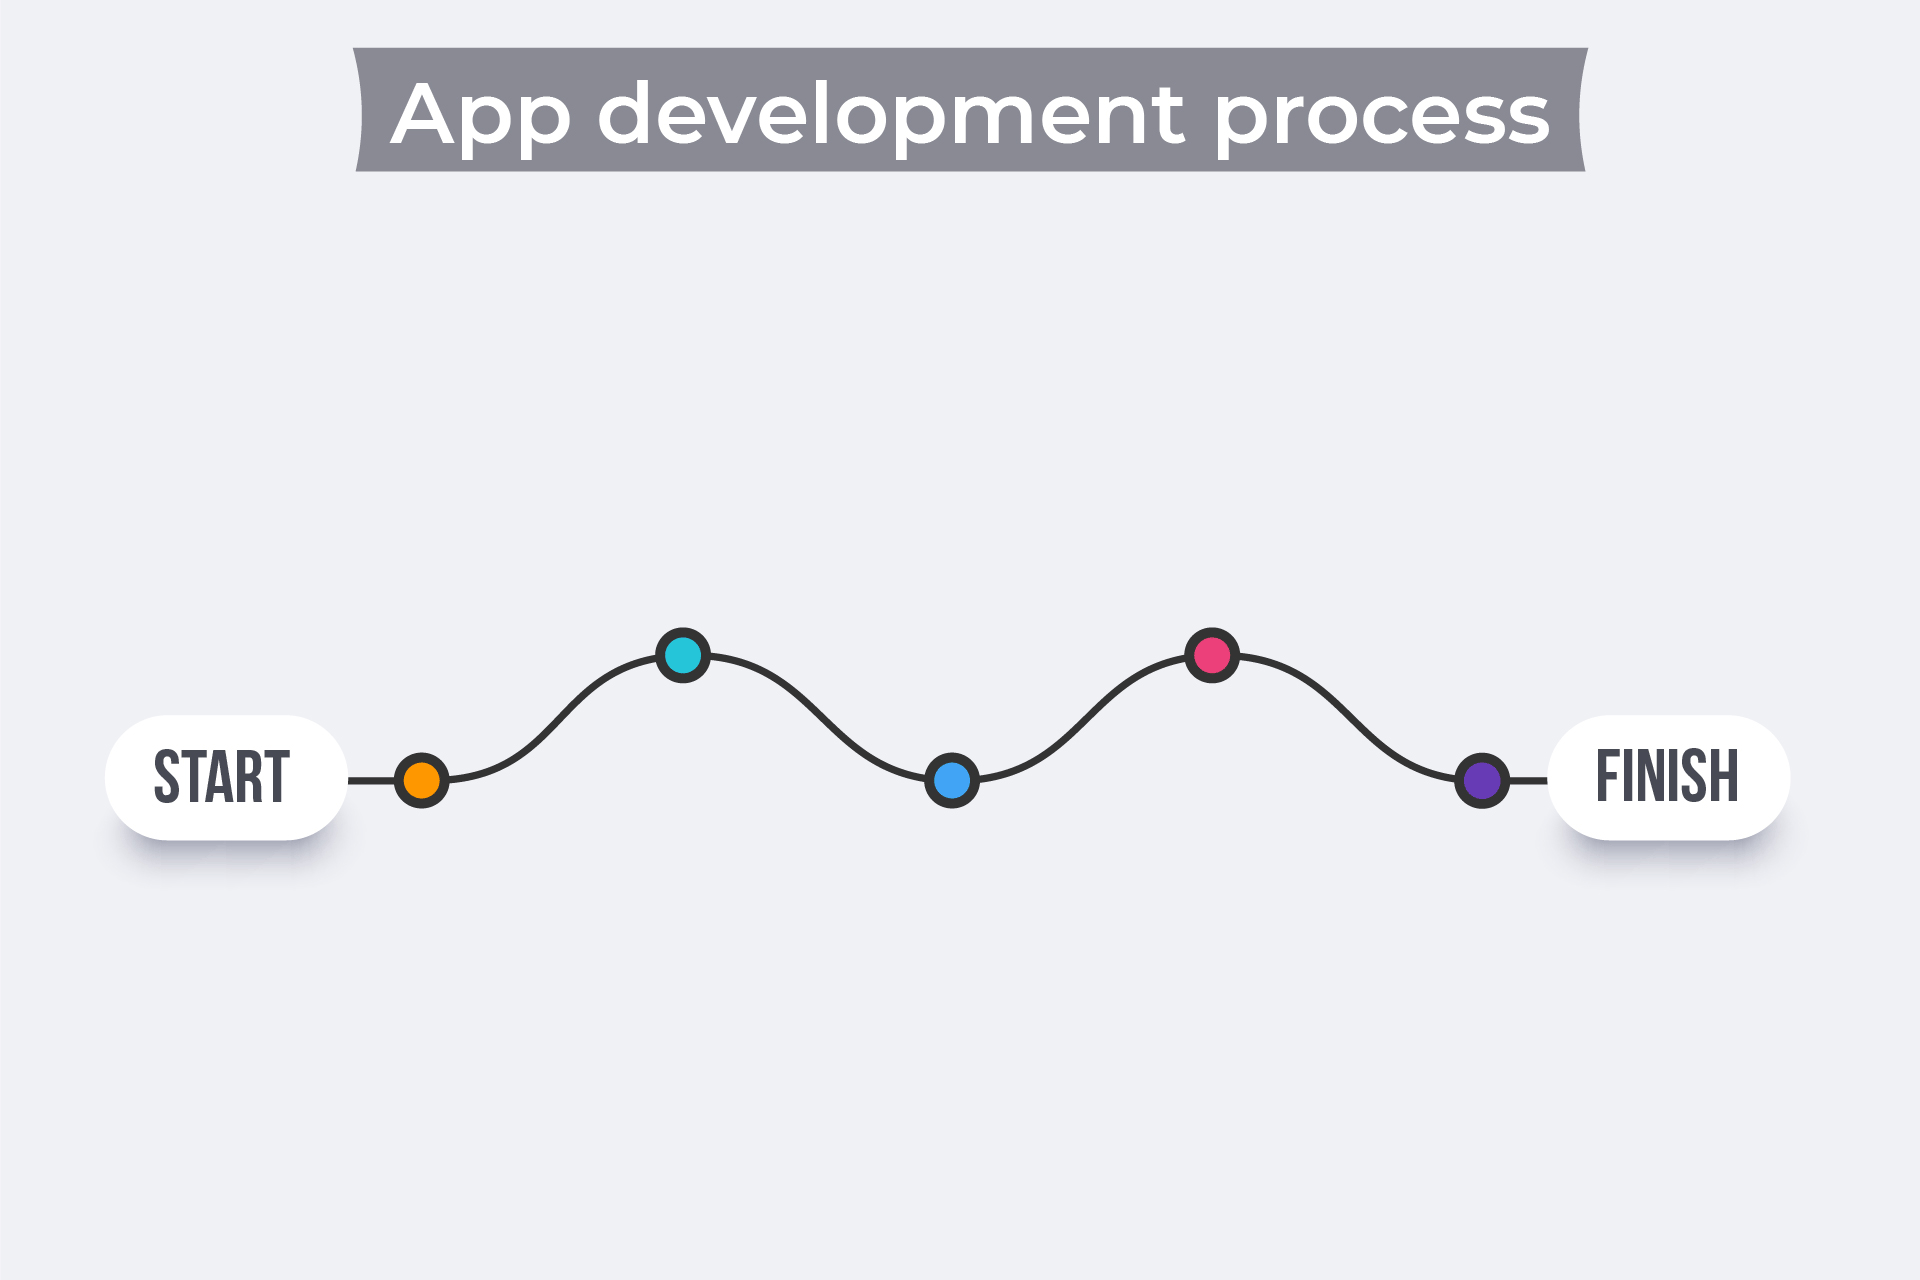 App development process
